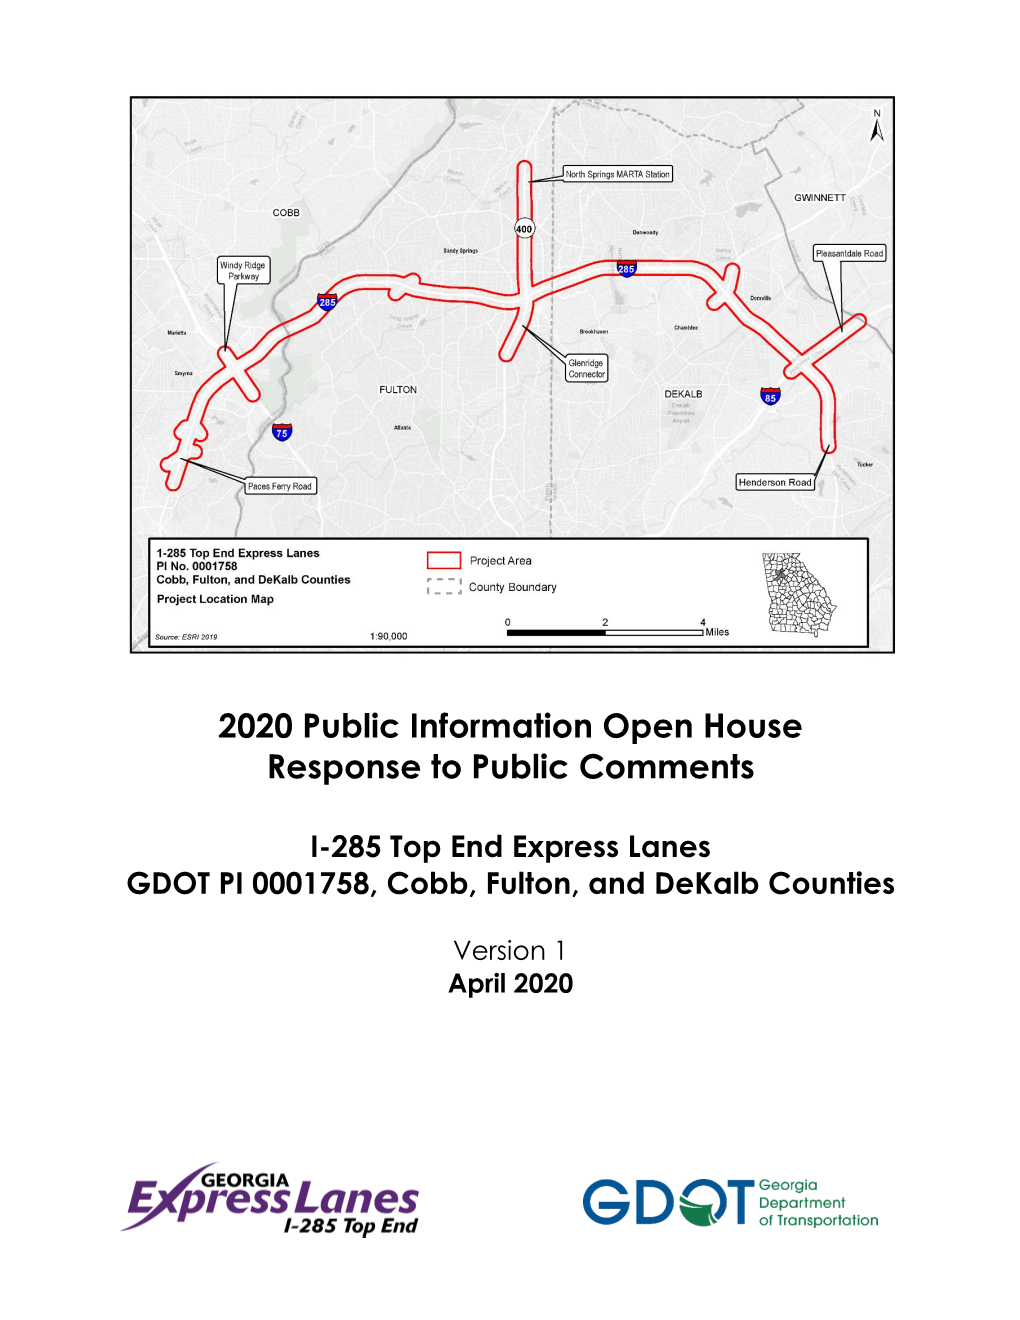 2020 Public Information Open House Response to Public Comments